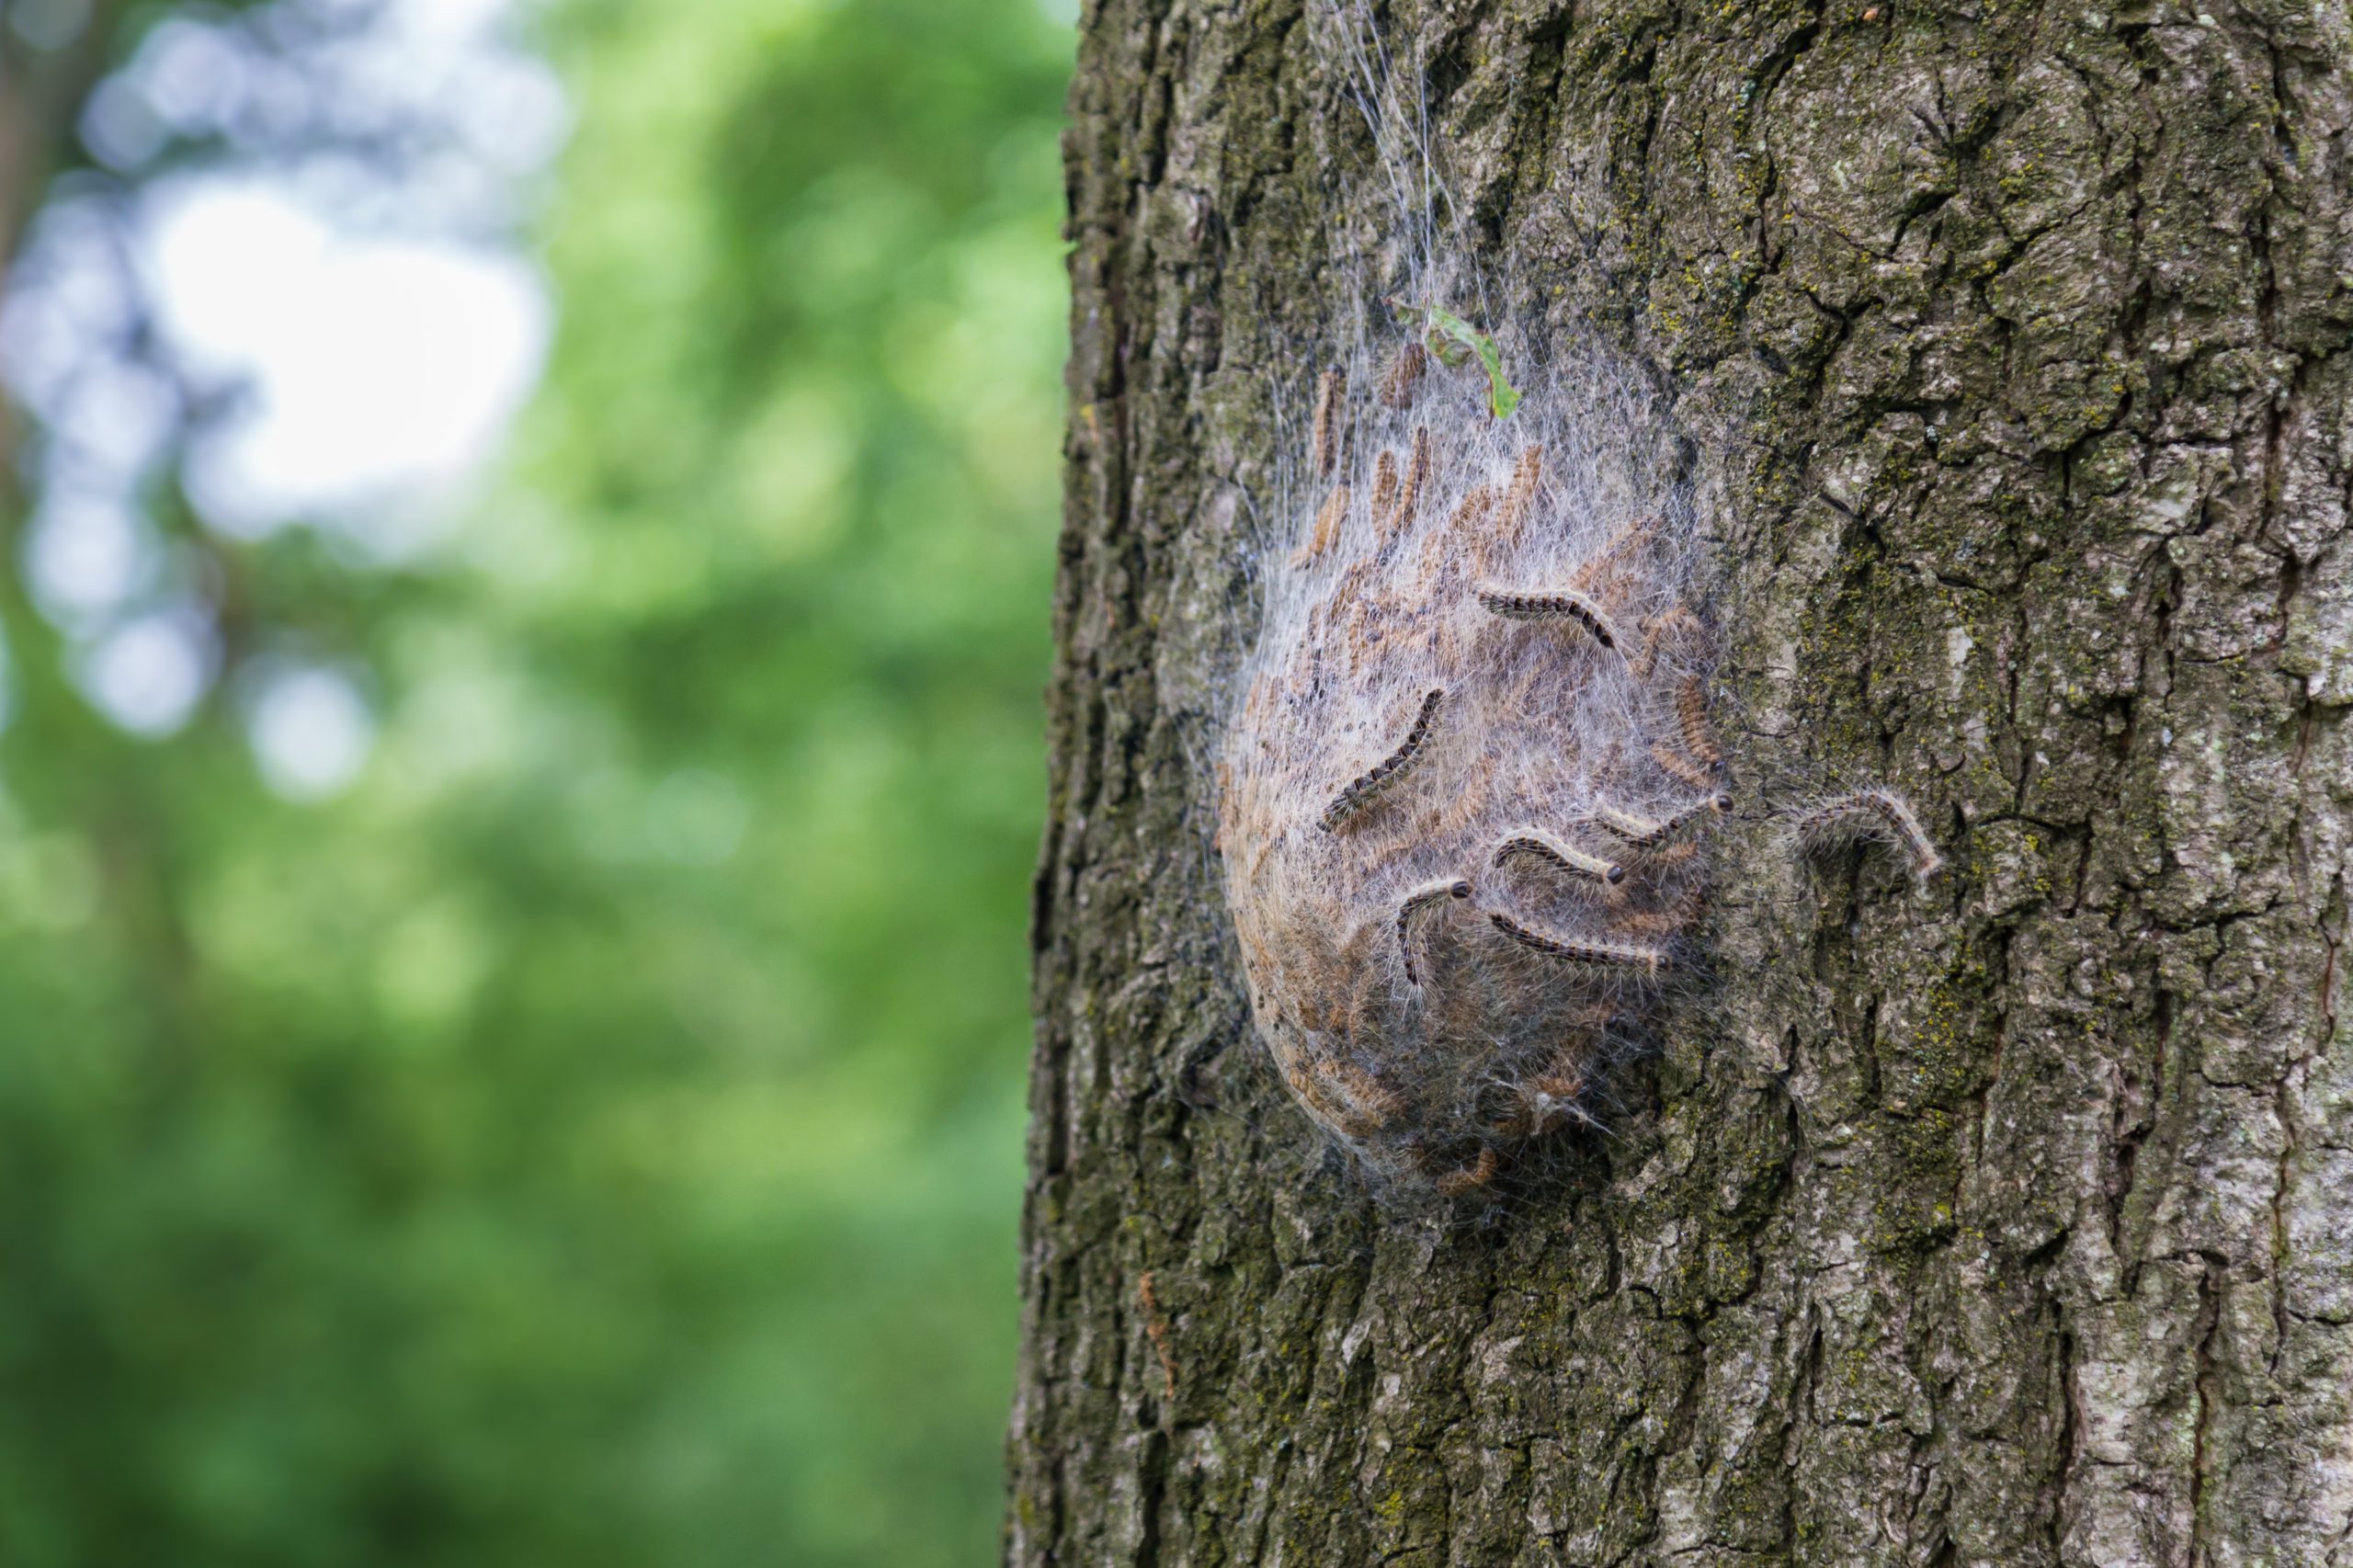 Procession caterpillar nest on the treen trunk of an oak tree